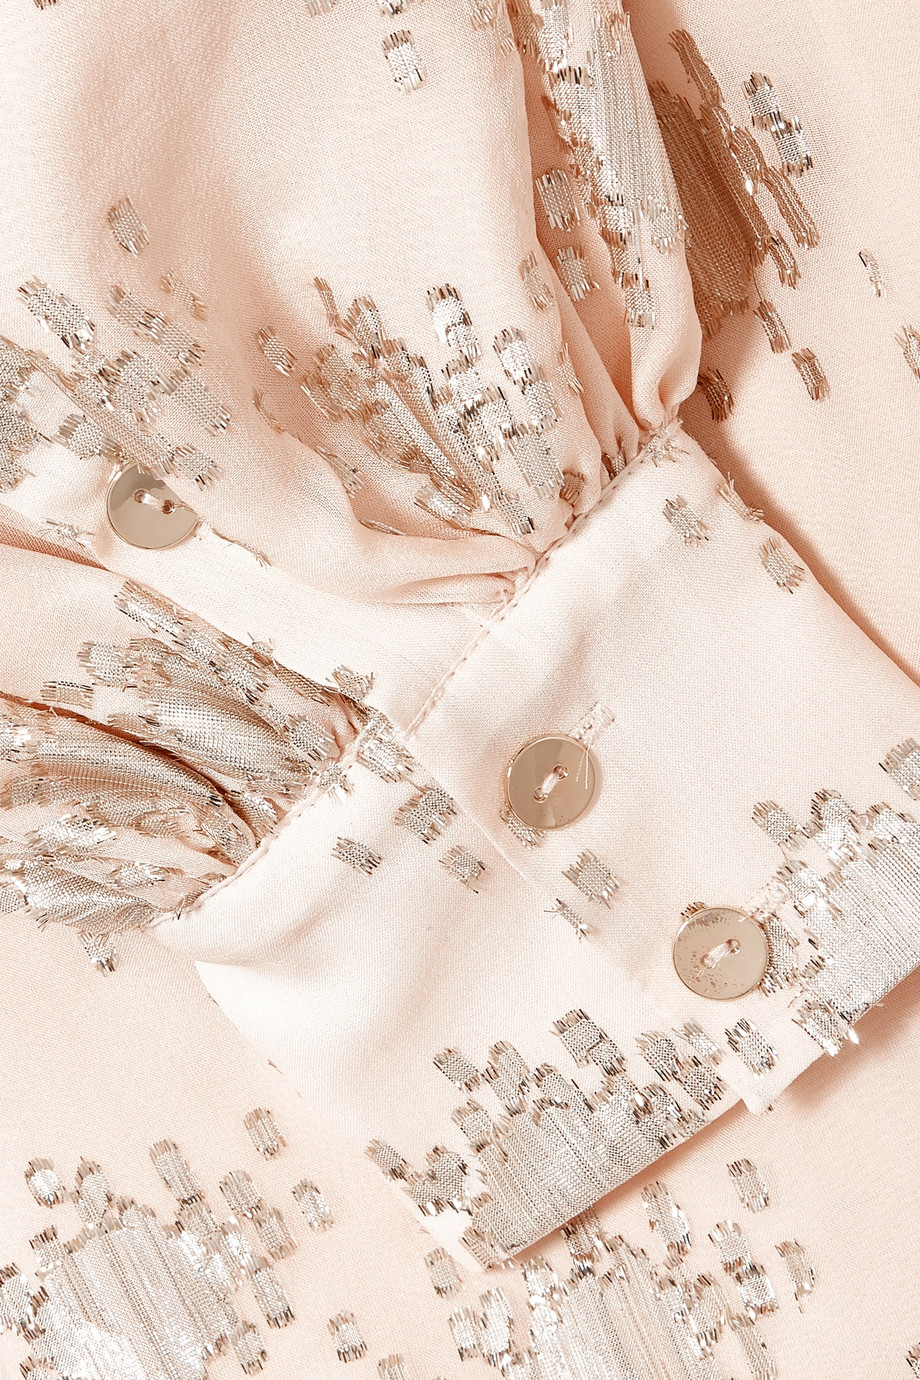 Блузка шелковая Stine Goya для женщин